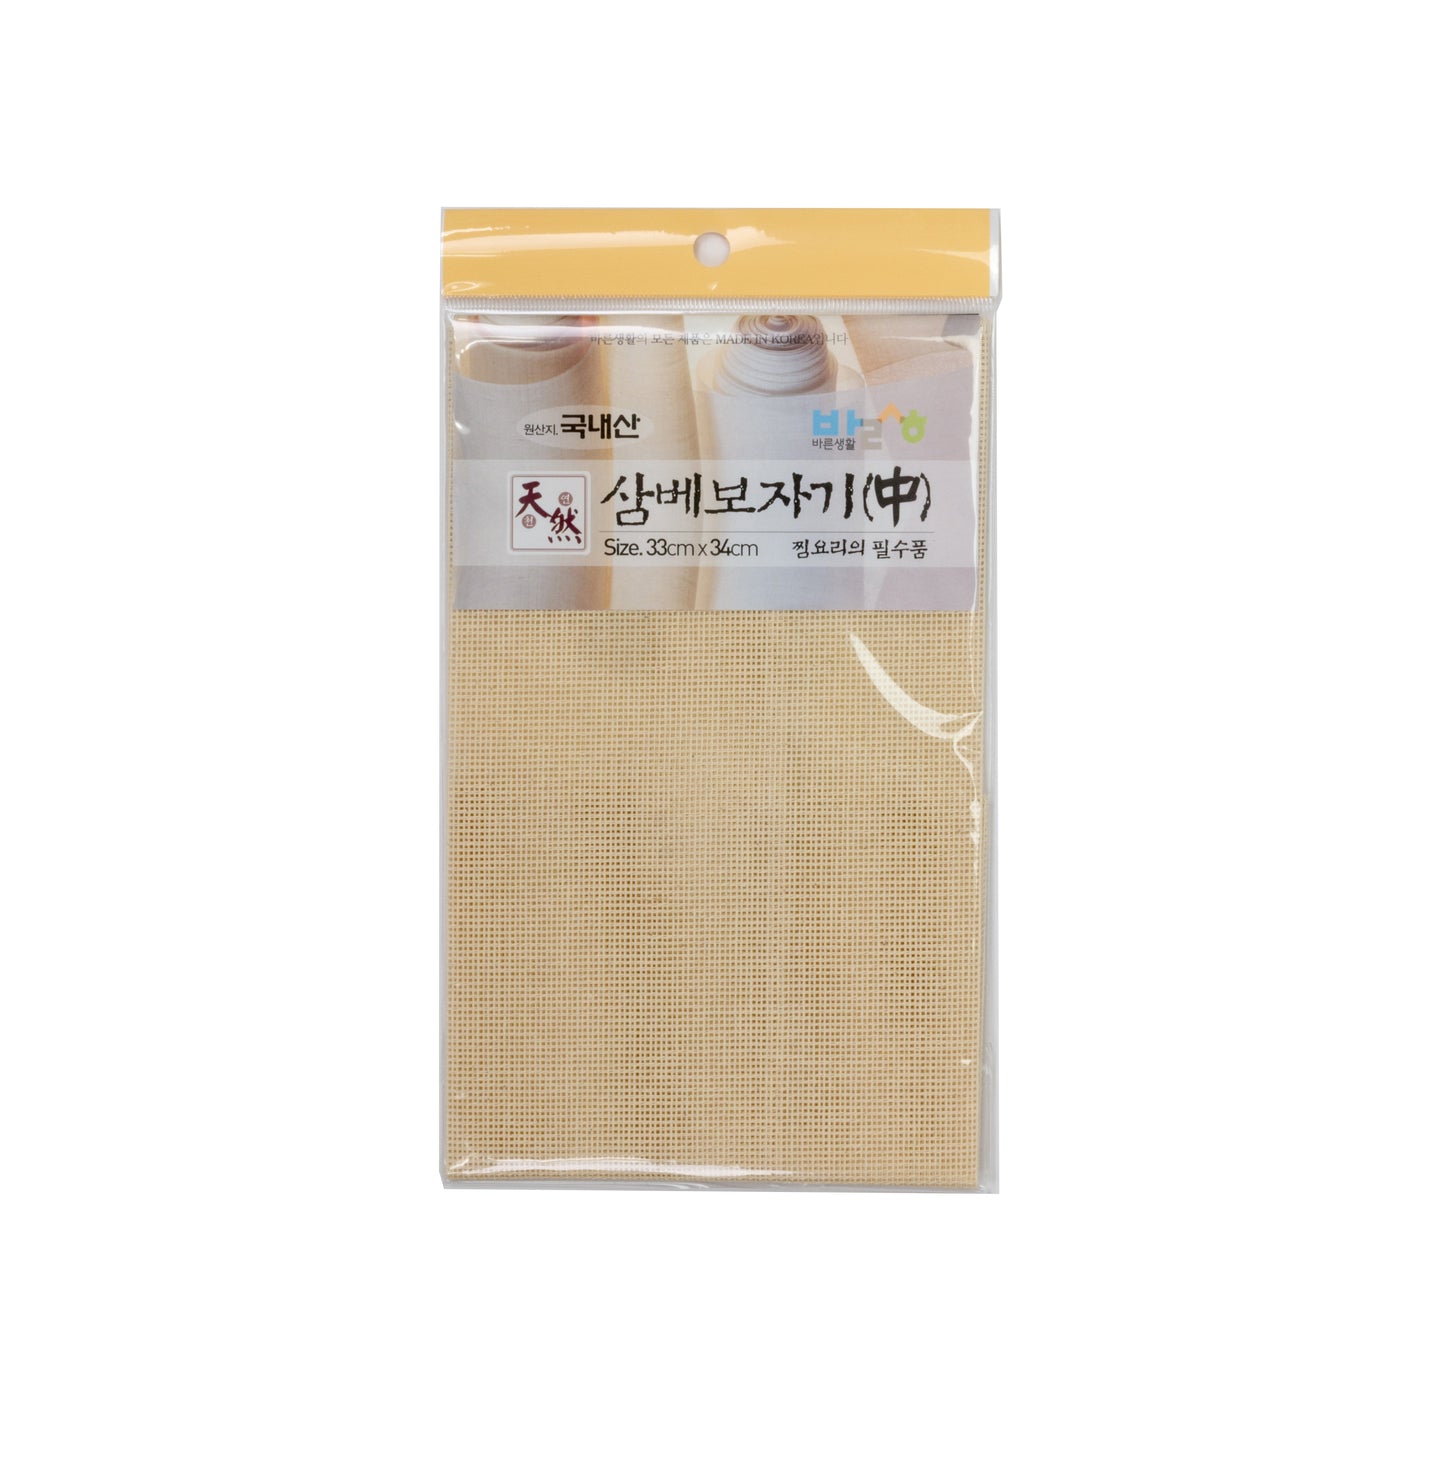 Hemp Wrapping Cloth - Square - Medium (34x33cm)